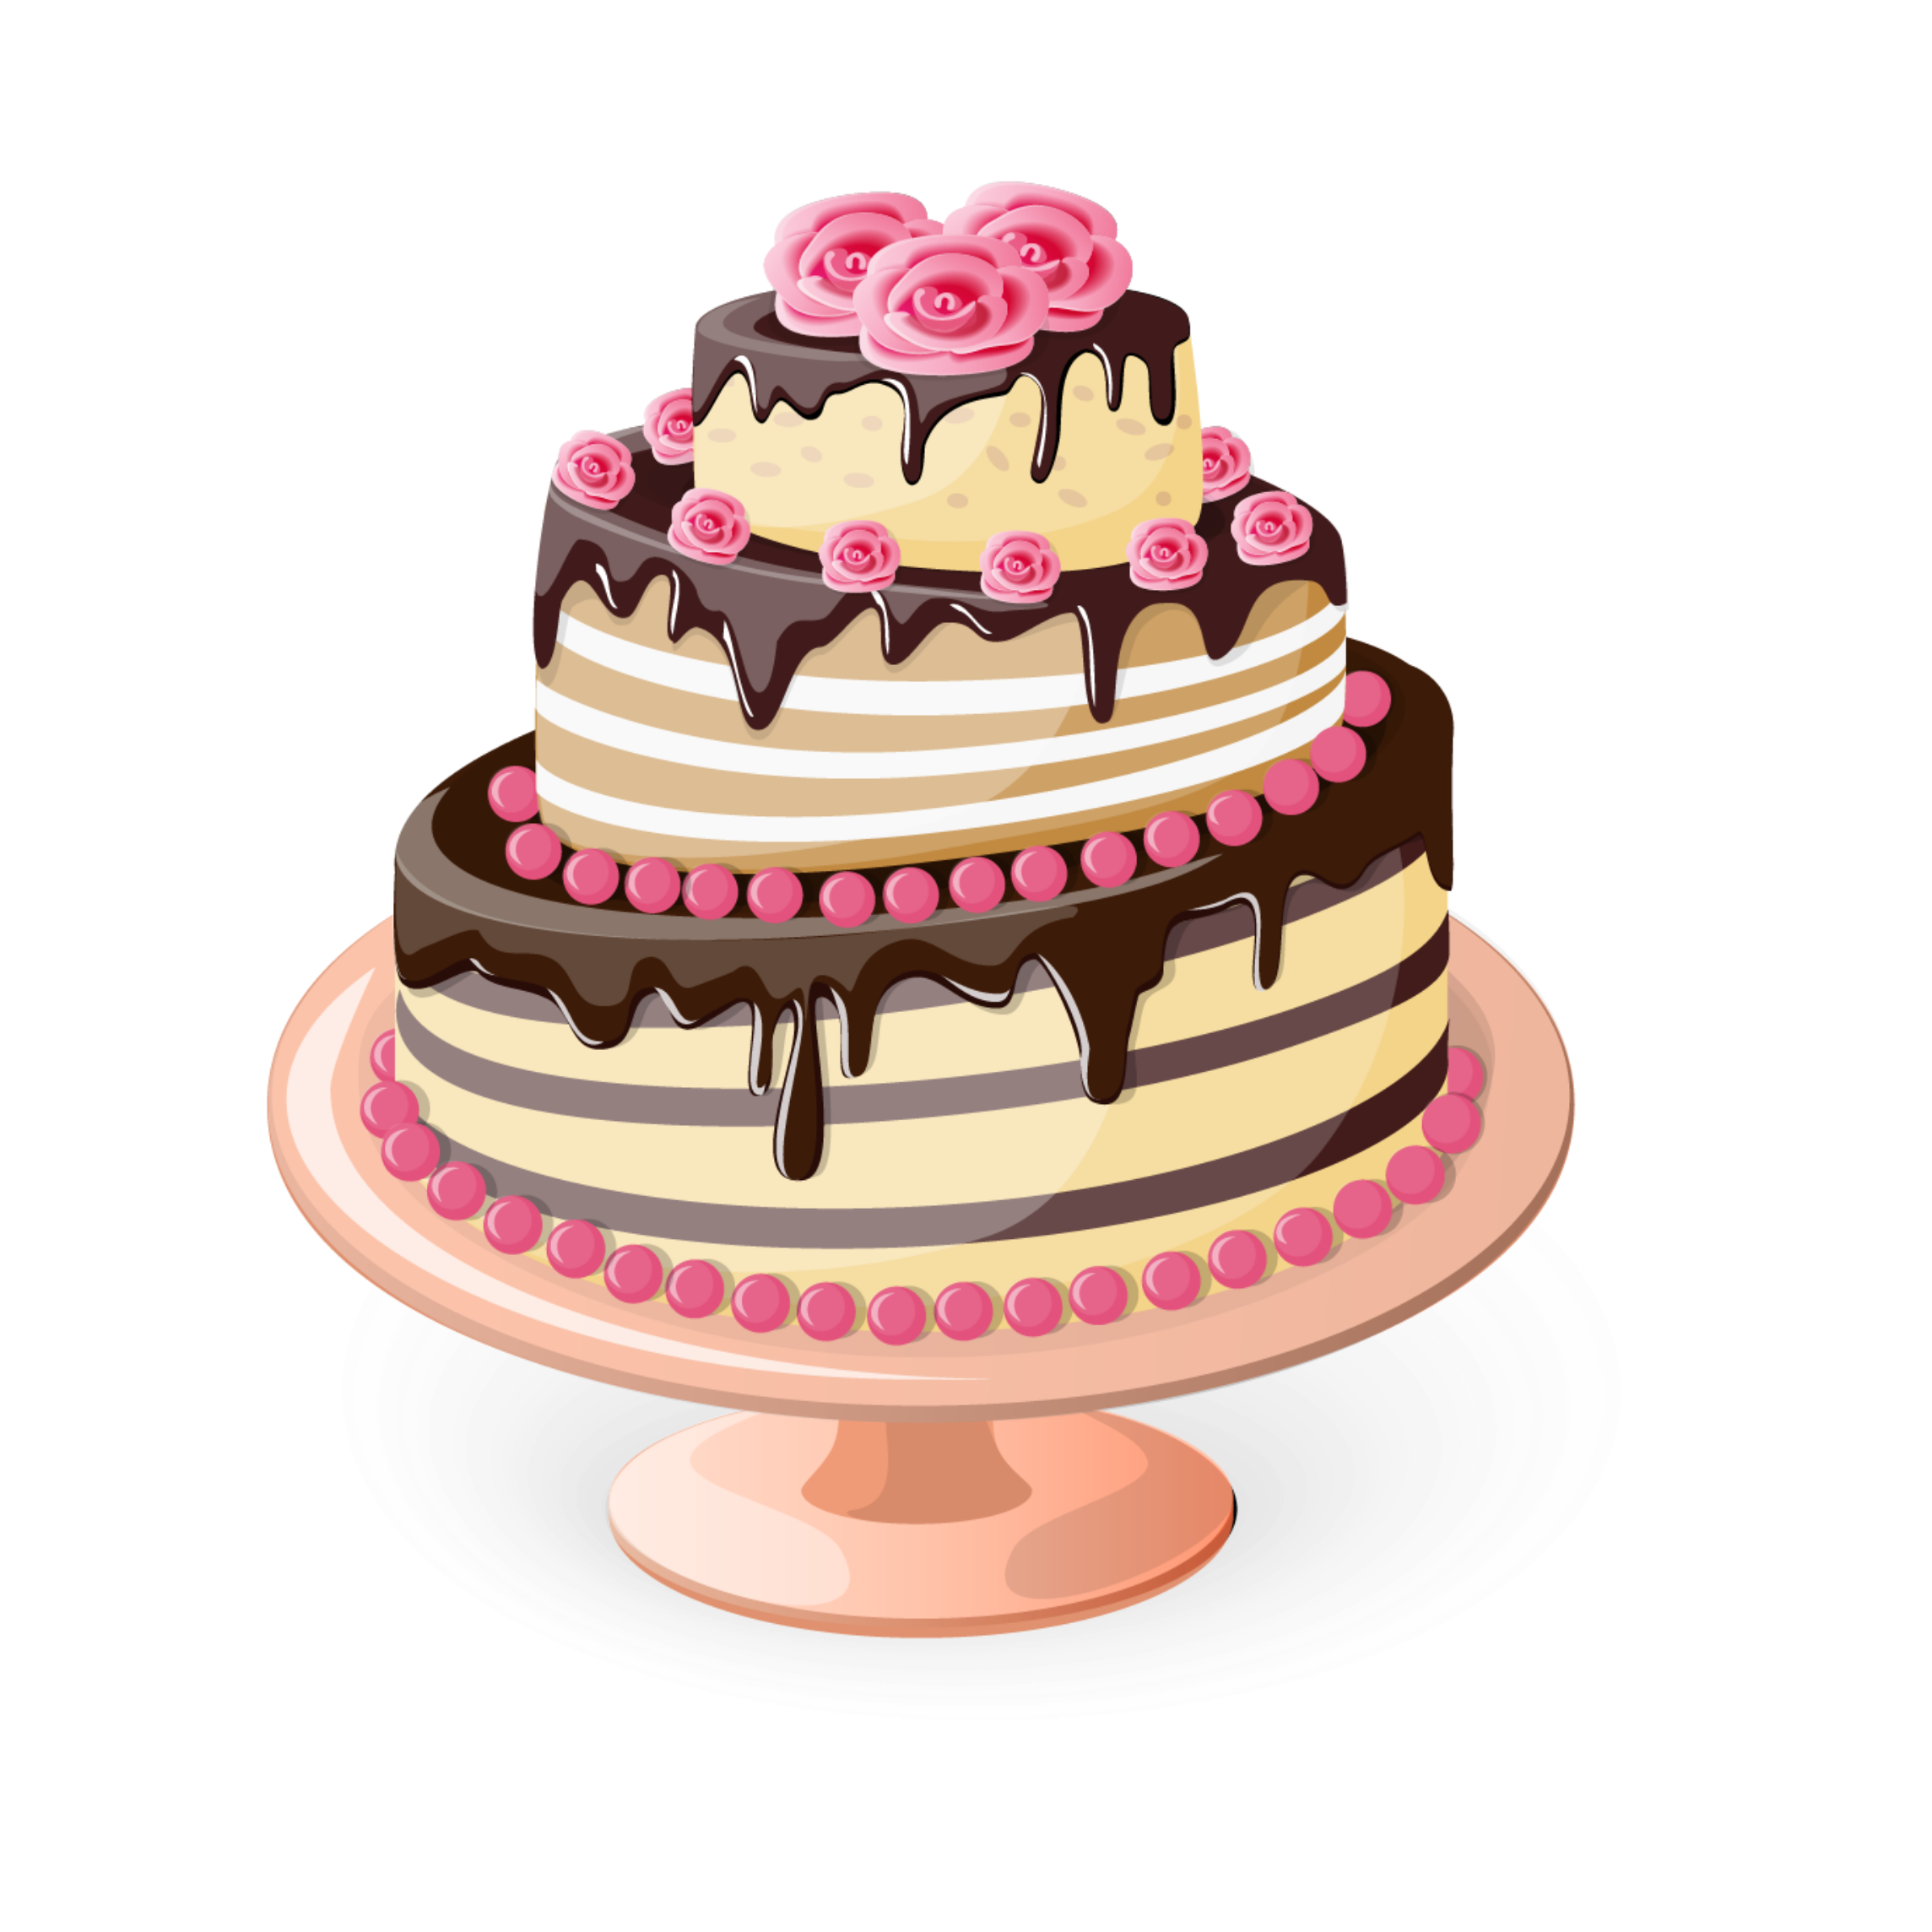 This visual is about mq birthdaycake cake dessert freetoedit #mq #birthdayc...